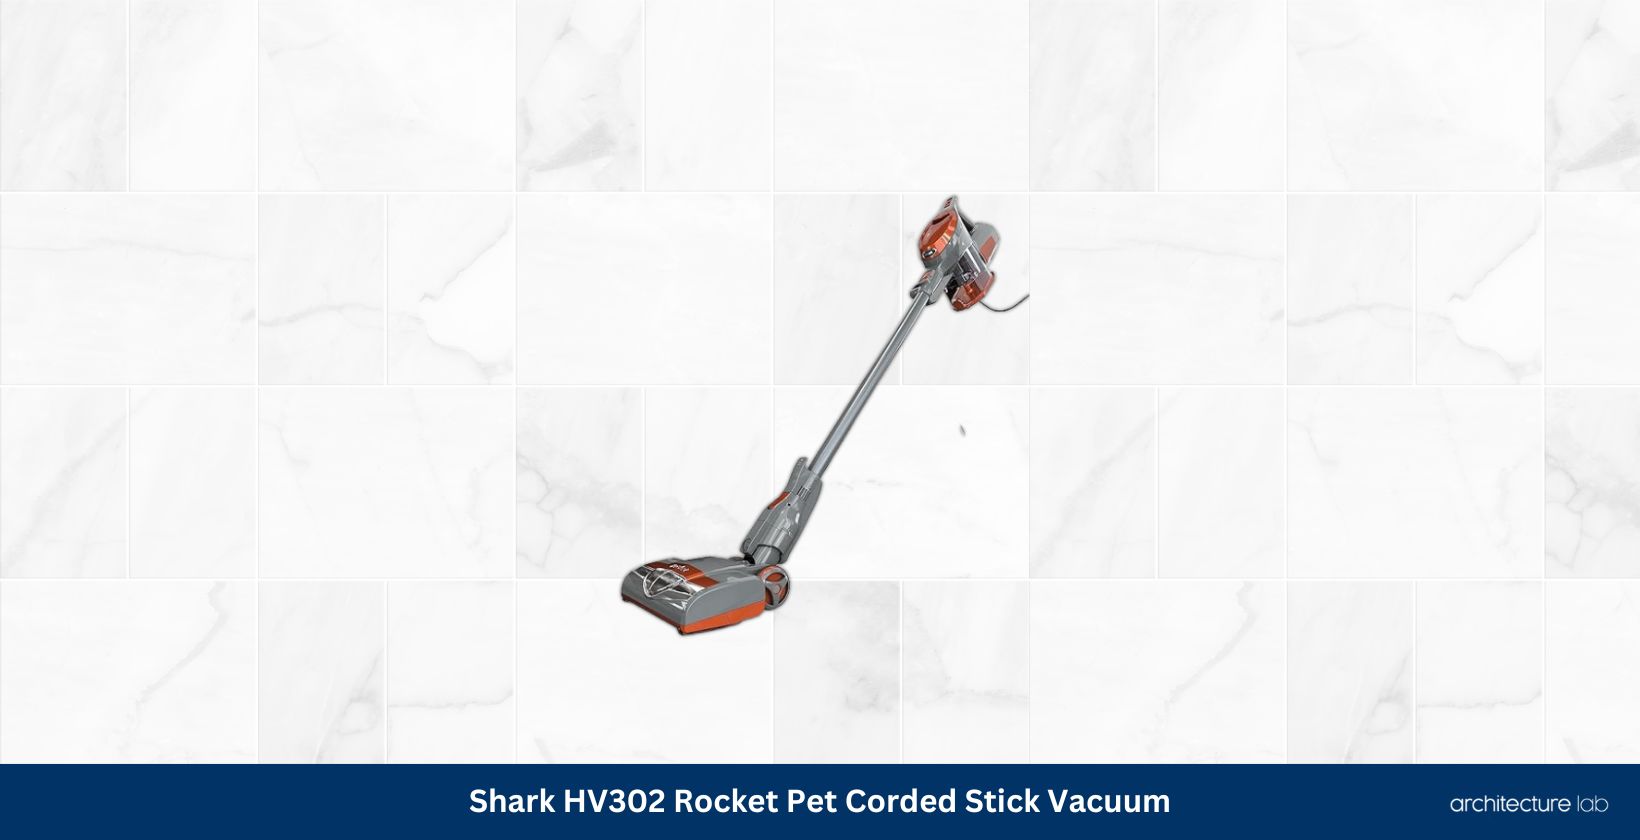 Shark hv302 rocket pet corded stick vacuum